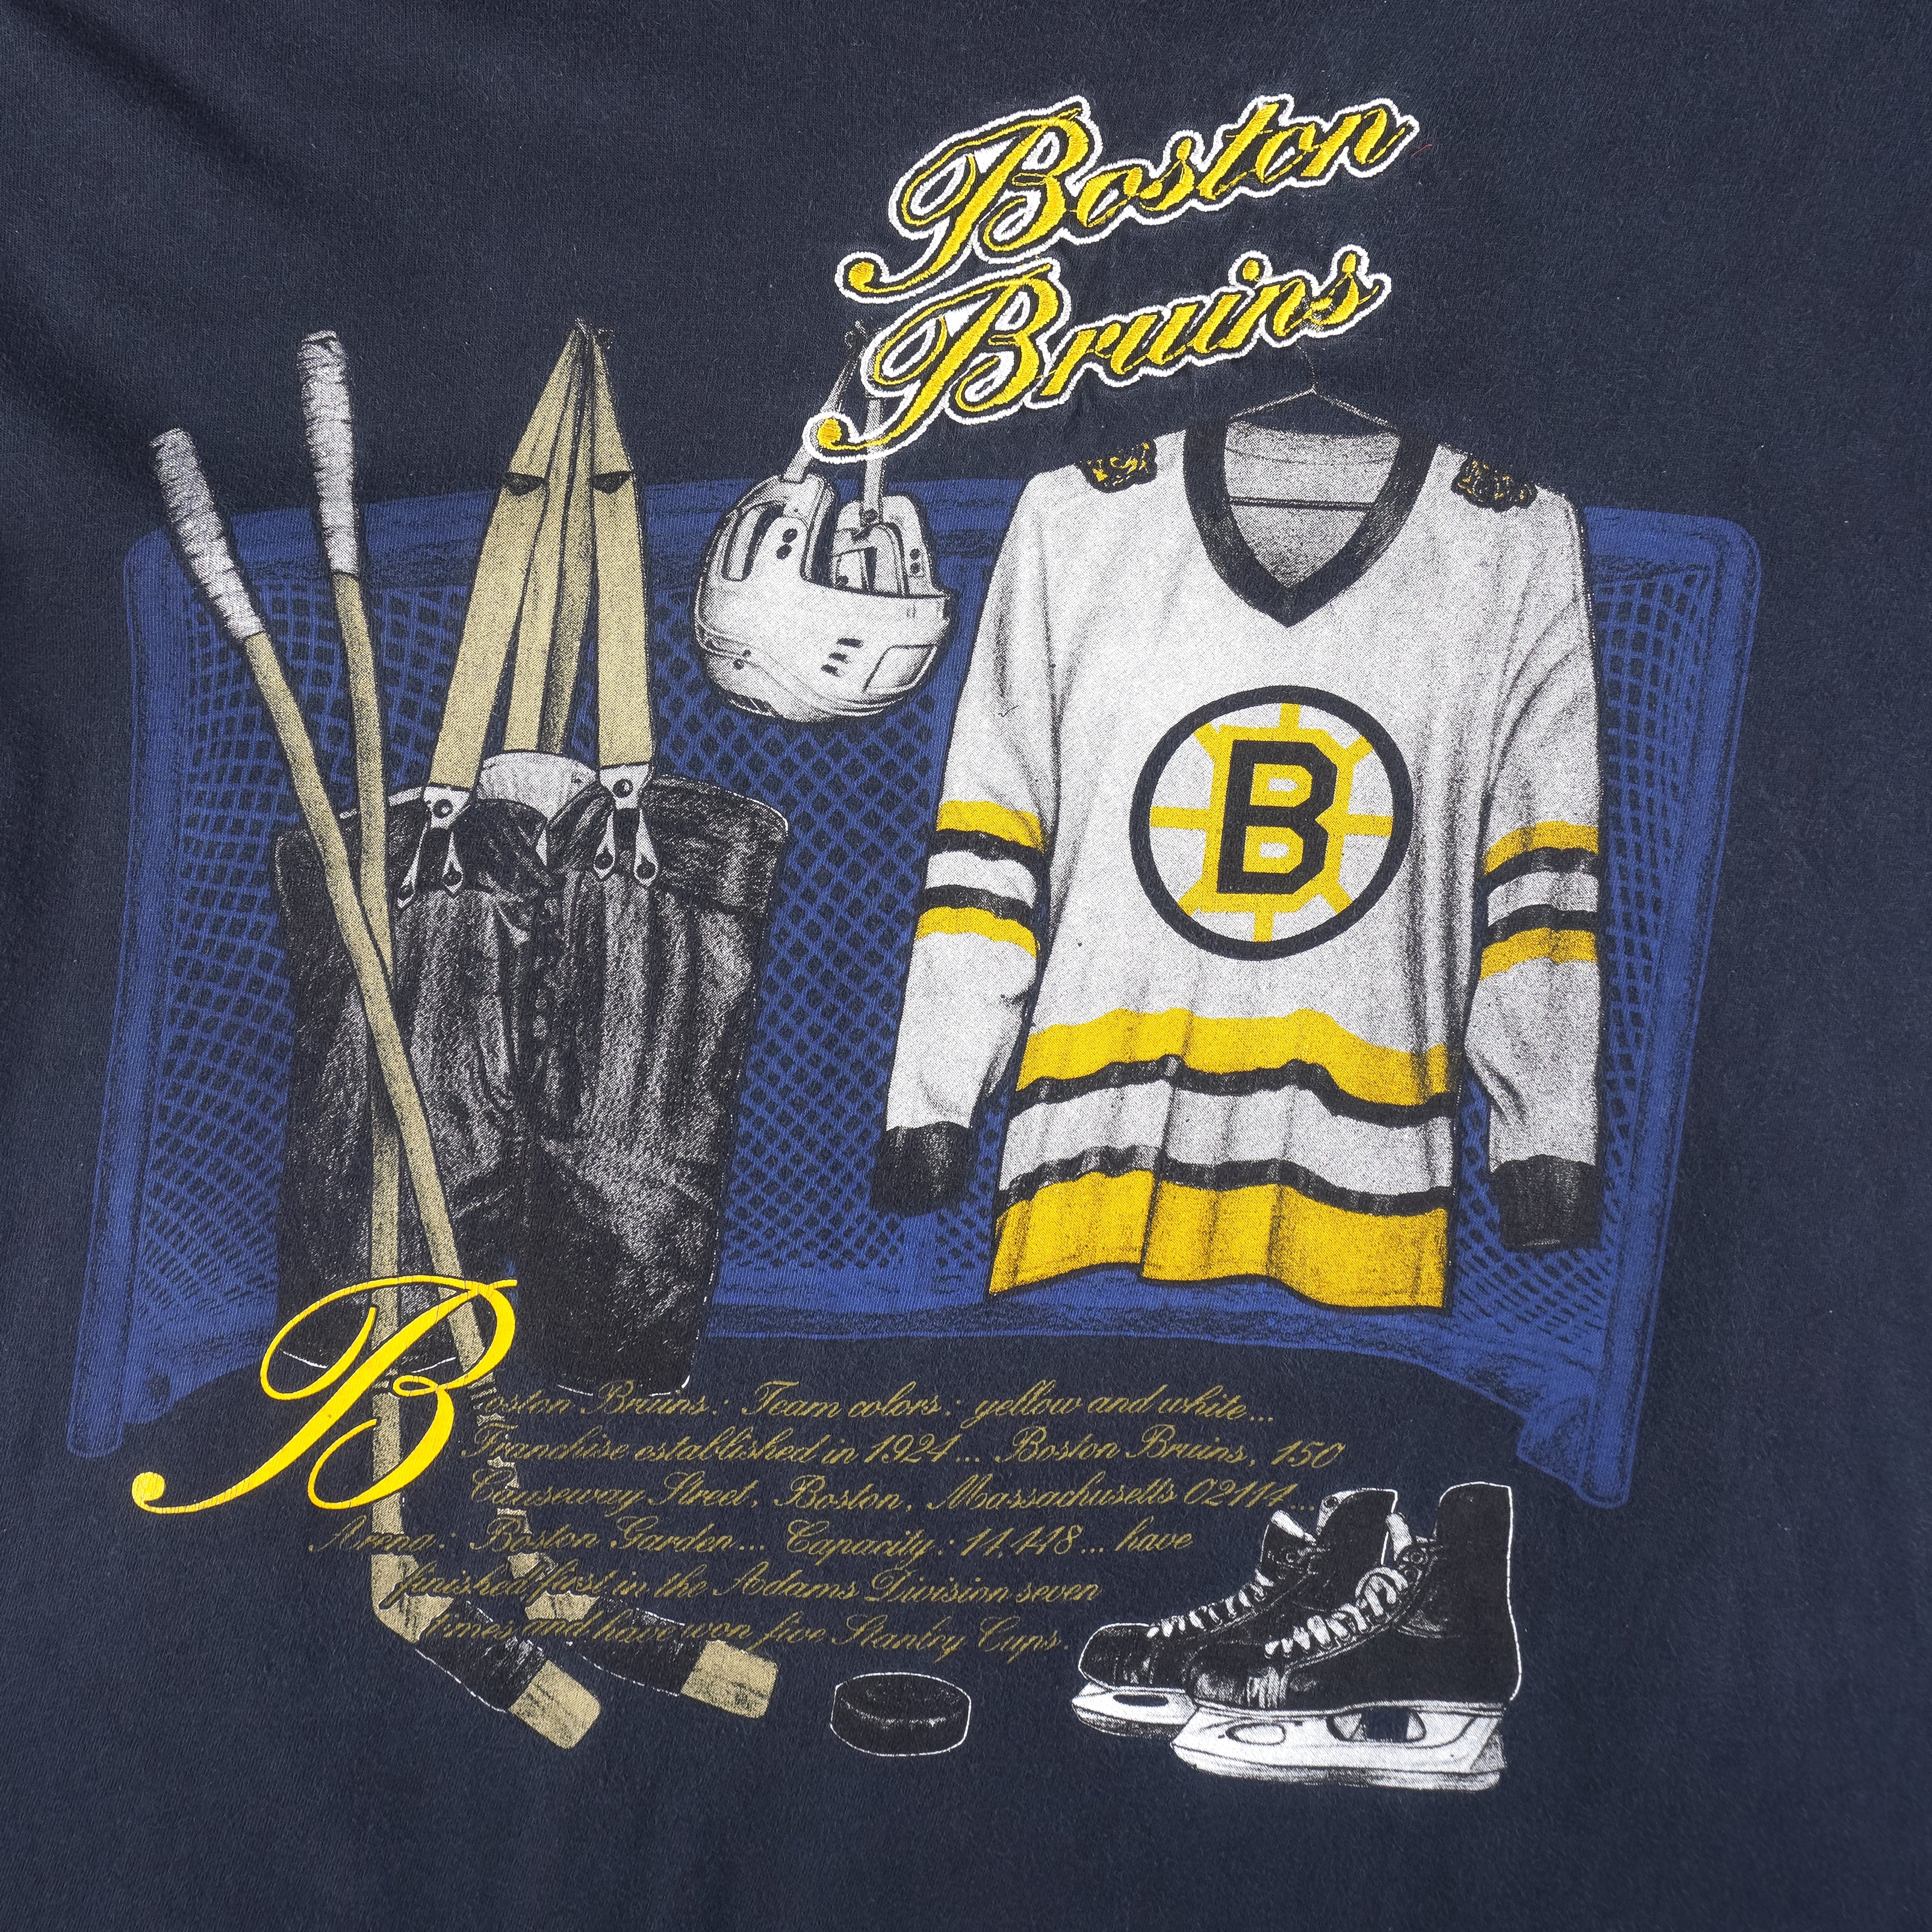 Boston Bruins Jerseys in Boston Bruins Team Shop 